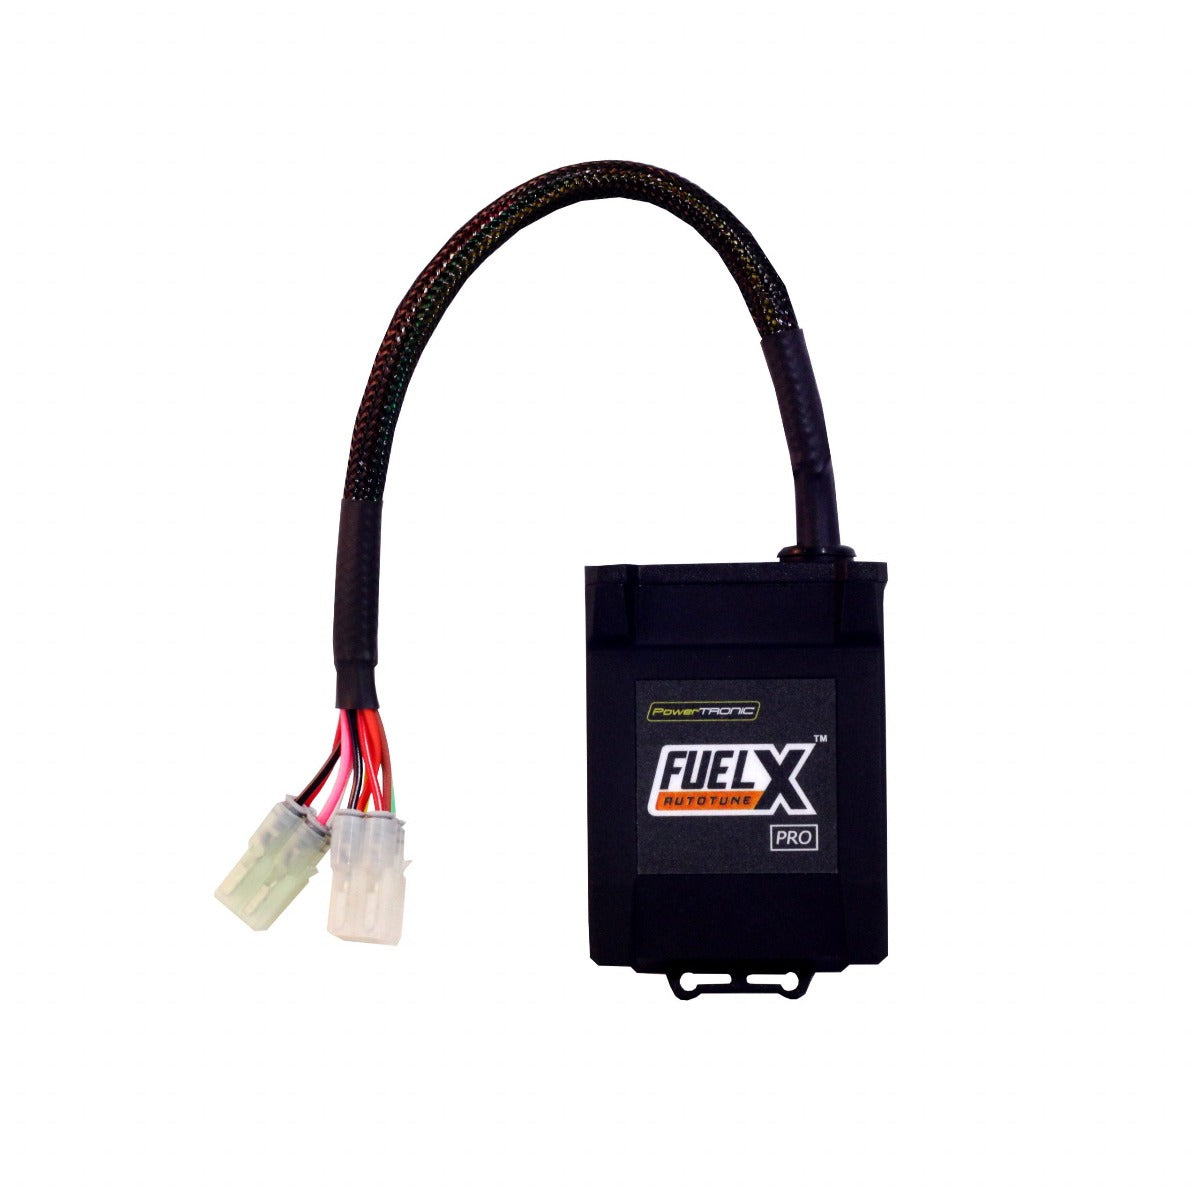 FuelX Autotune Pro Fuel Injection Optimizer for Suzuki - 1